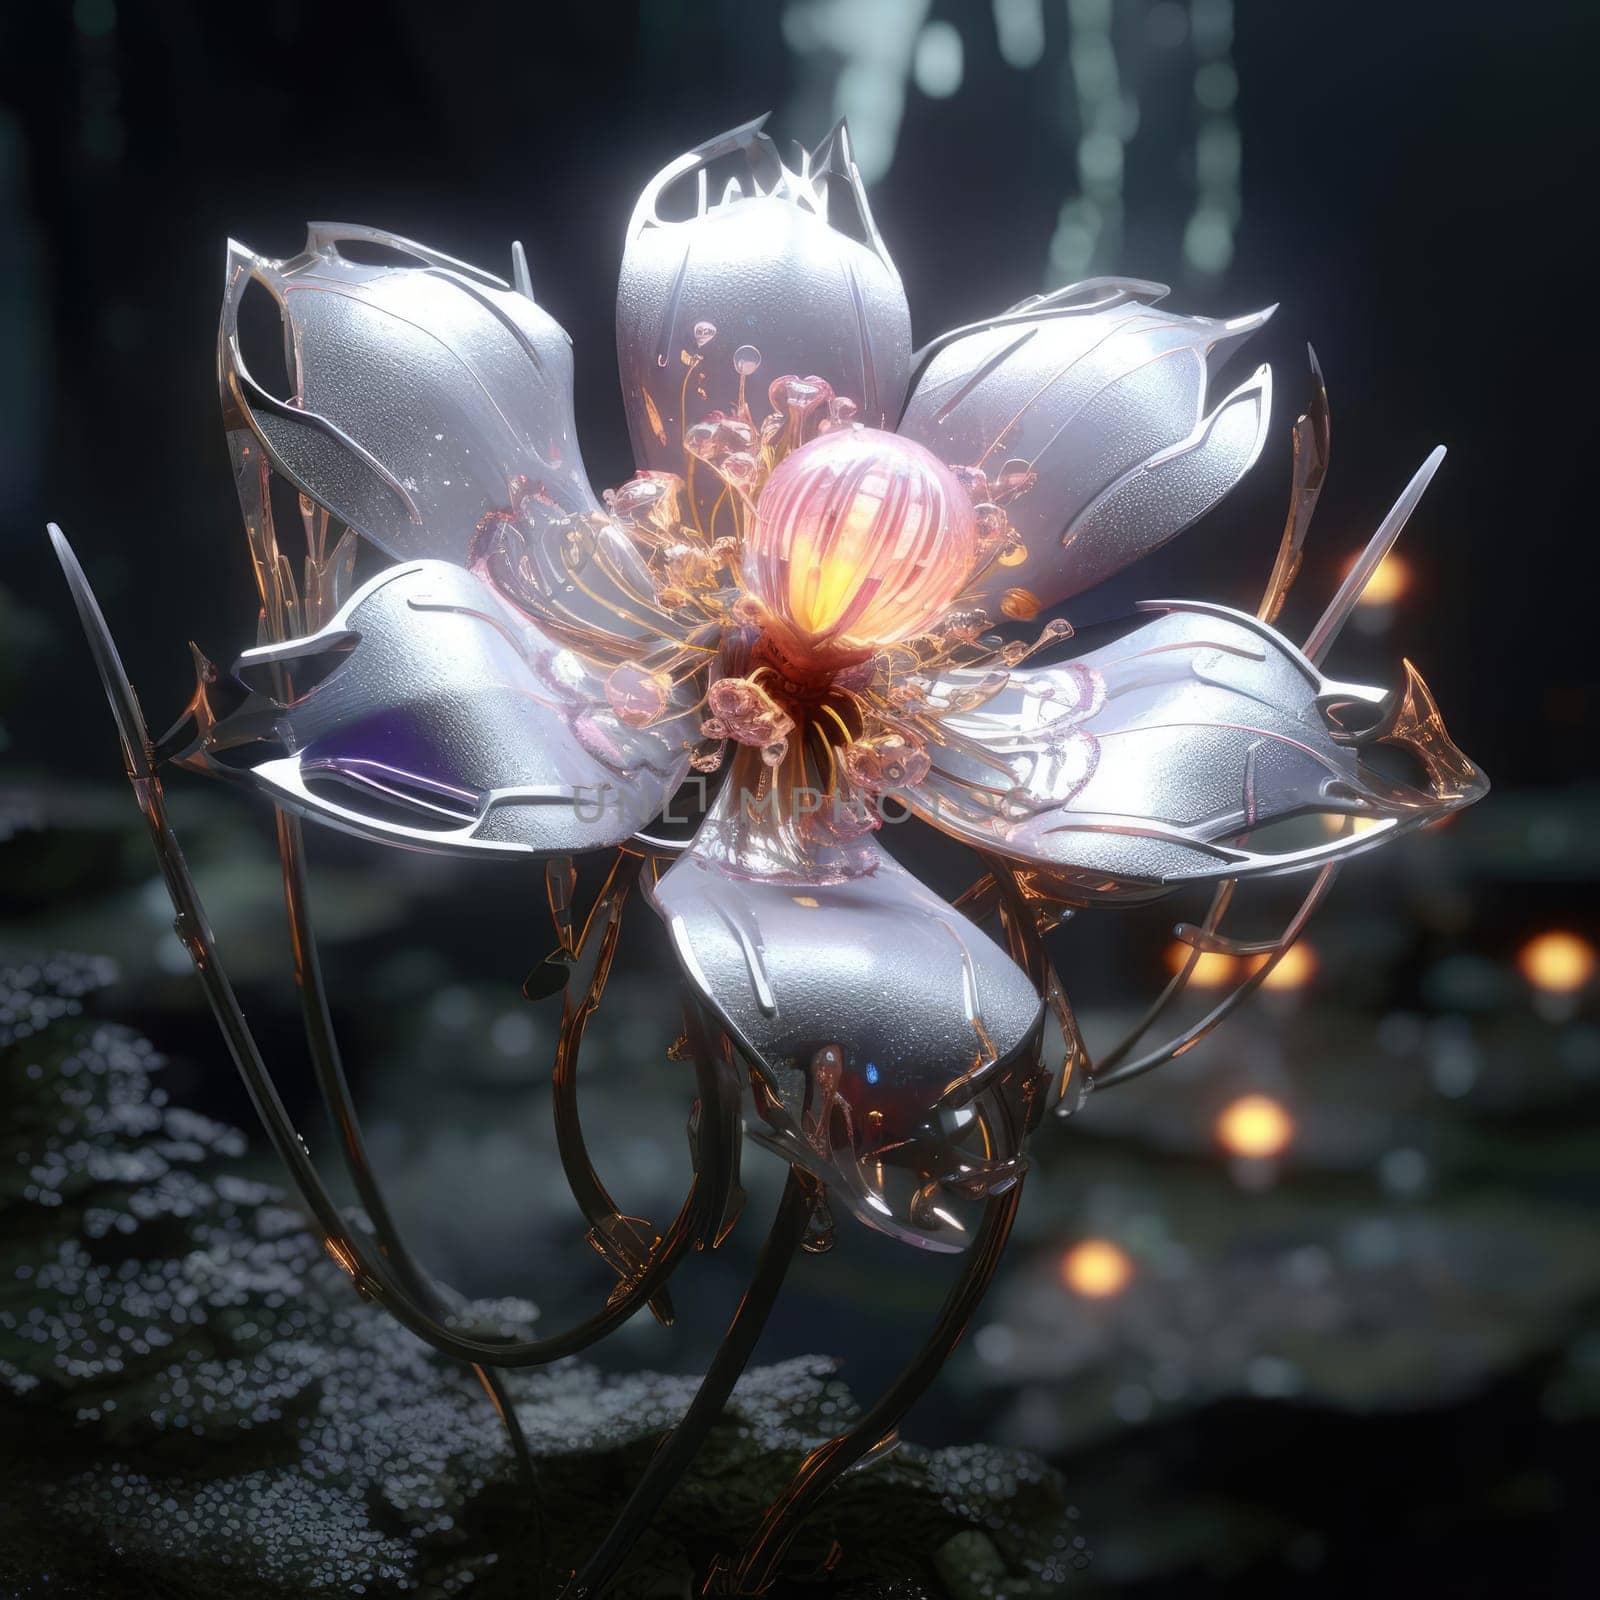 Sci-fi is a beautiful flower by cherezoff